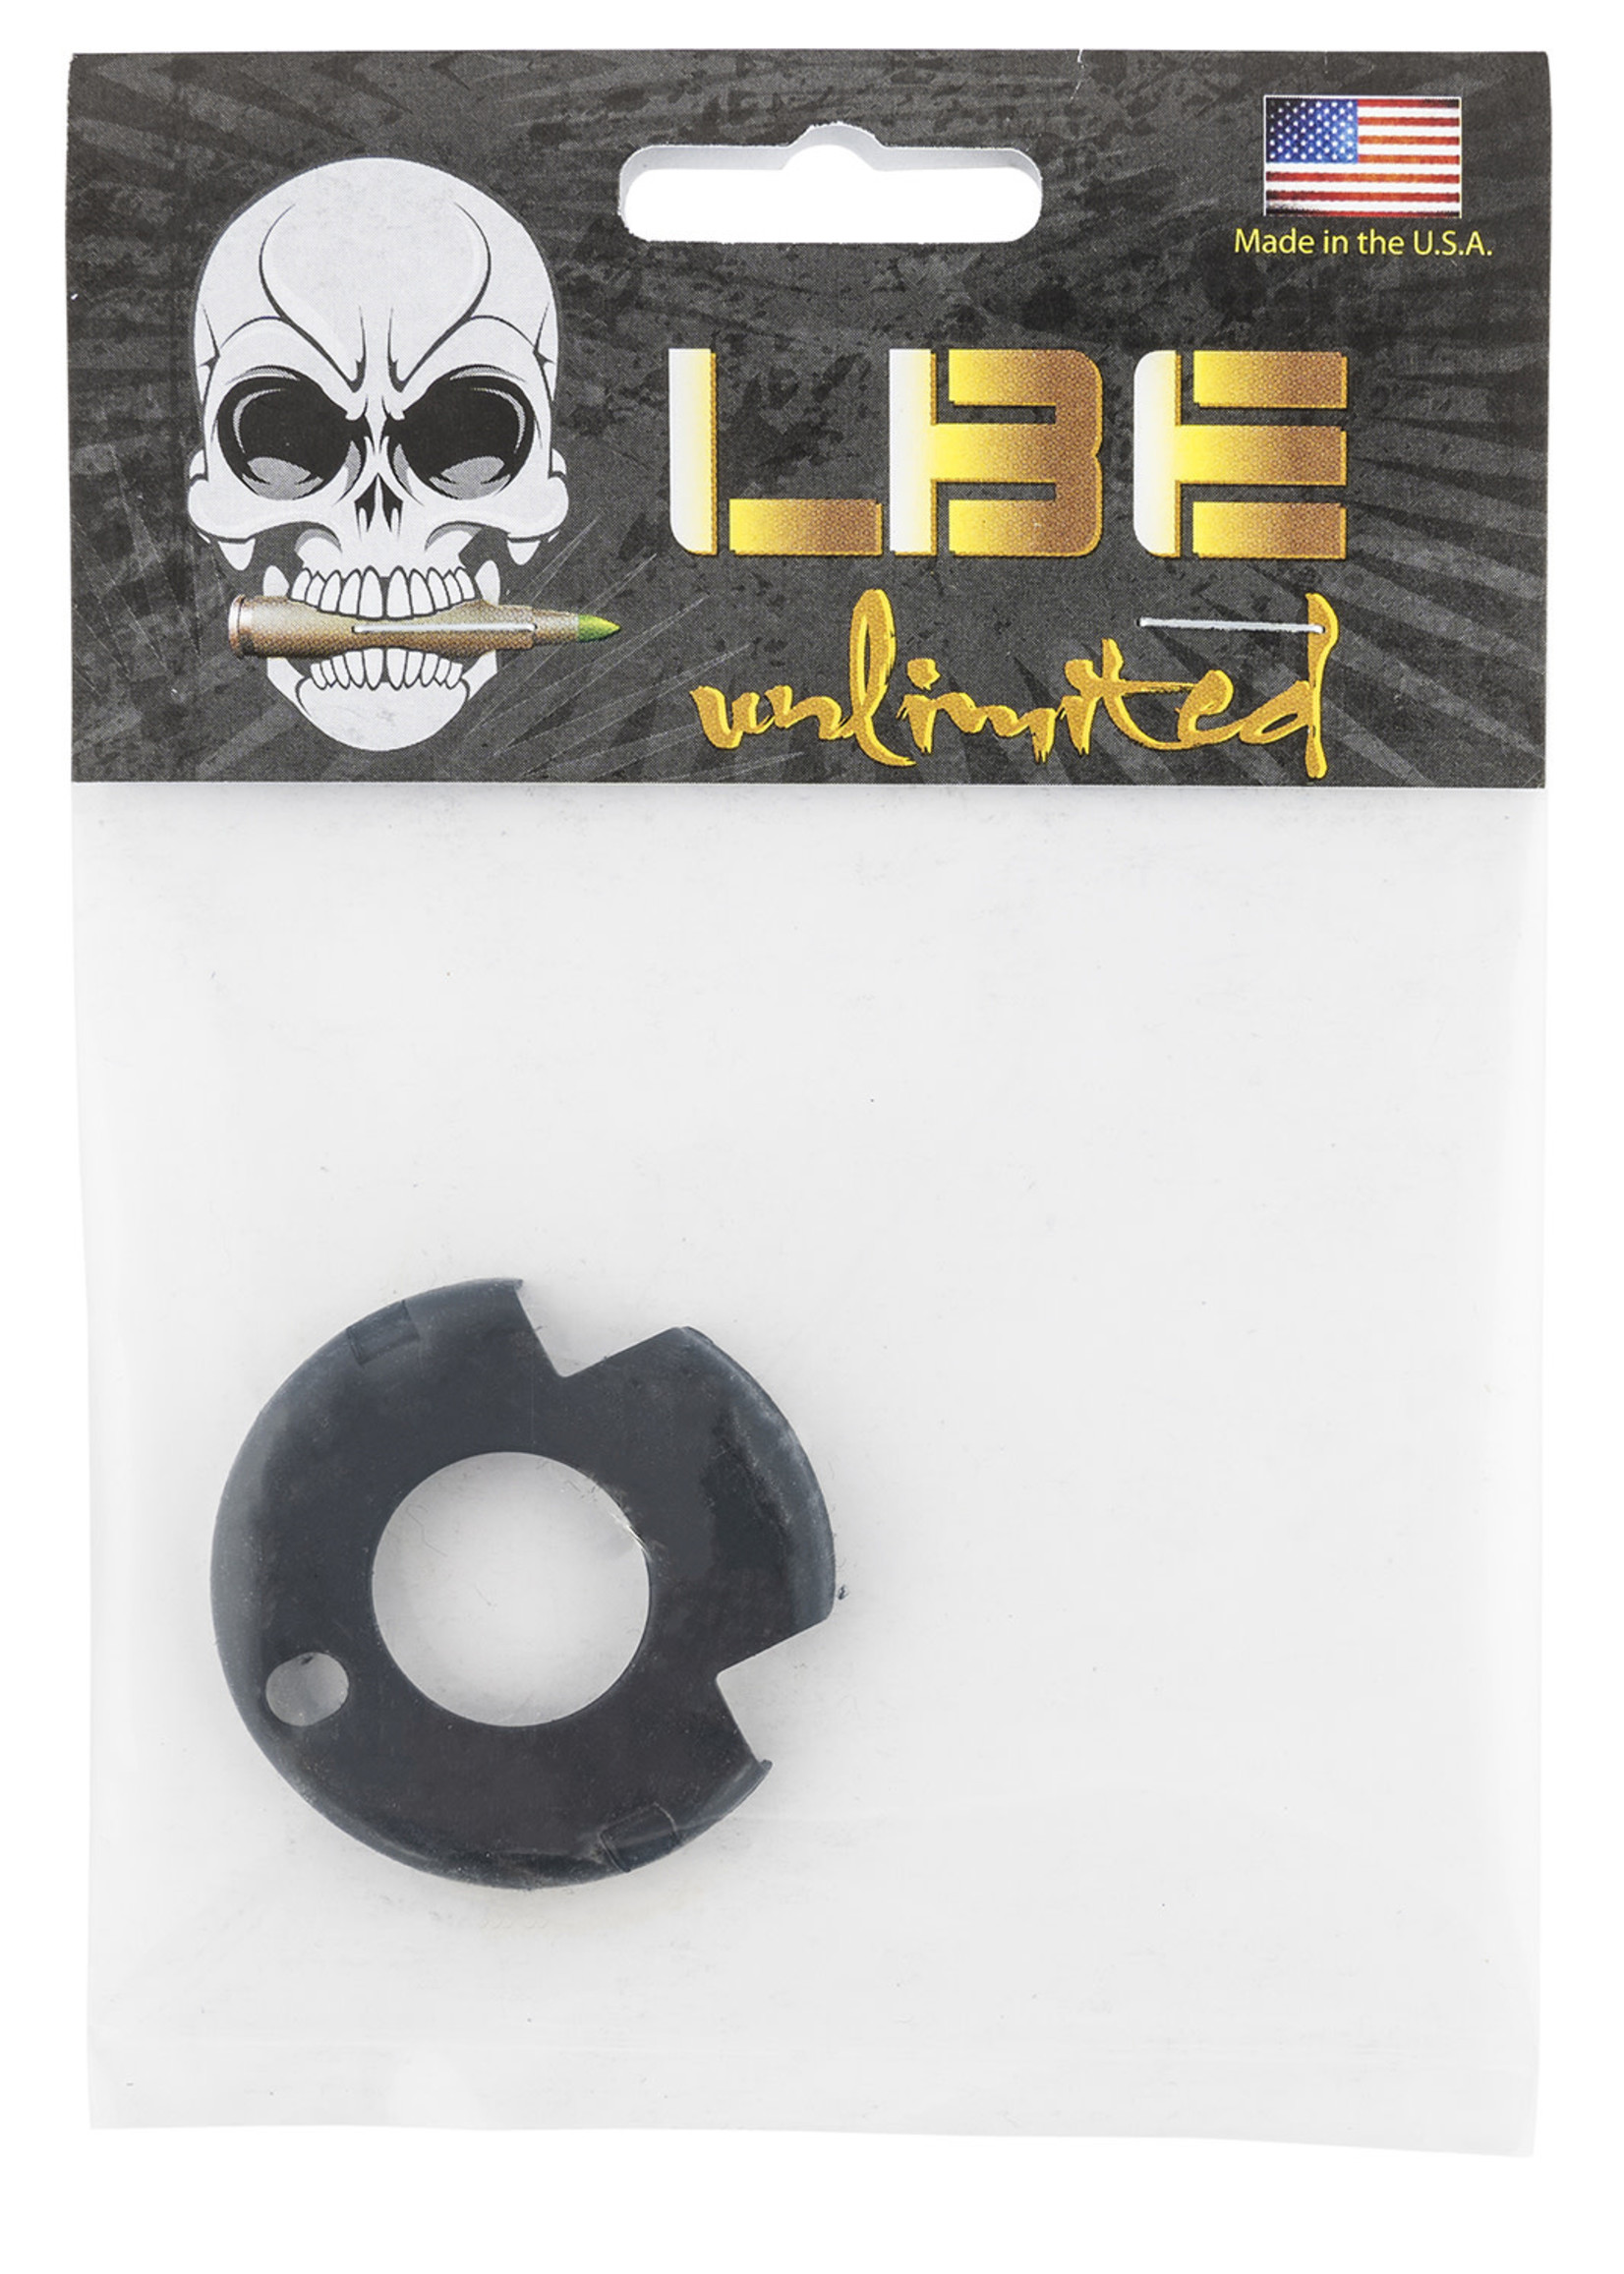 LBE Unlimited LBE Unlimited Handguard Cap Round W/M4 Cuts AR-Platform Black Steel